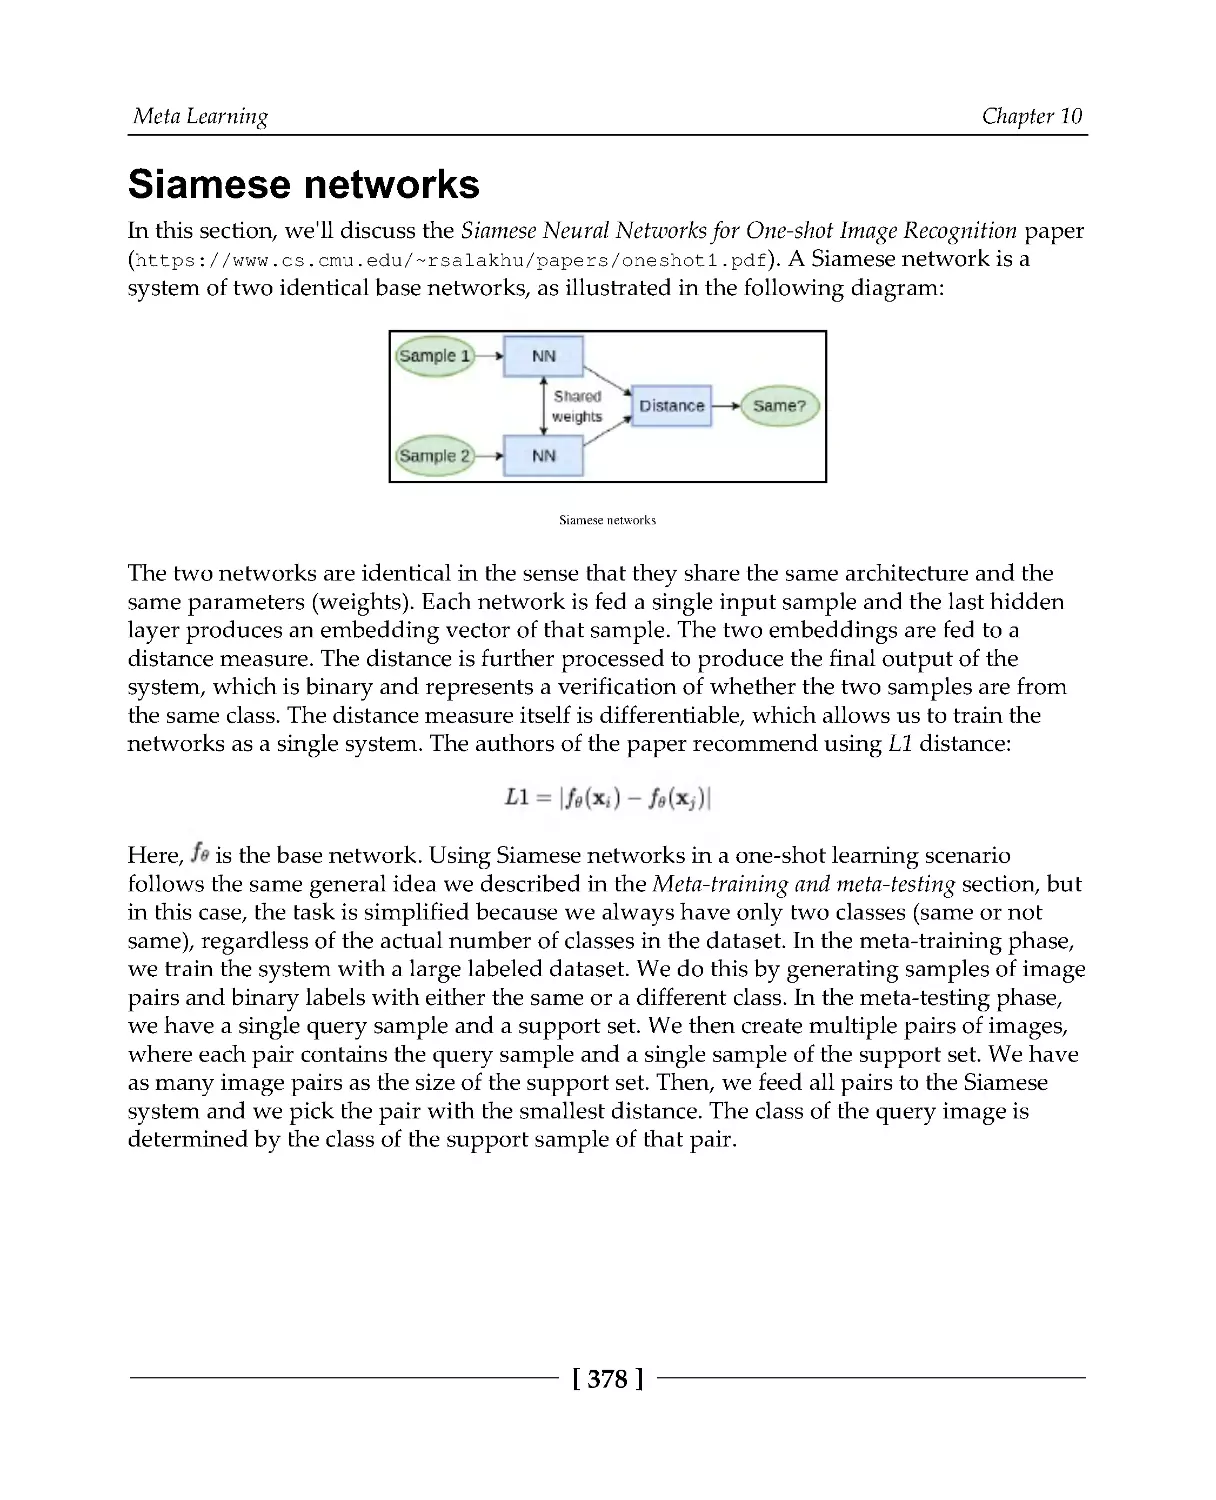 Siamese networks